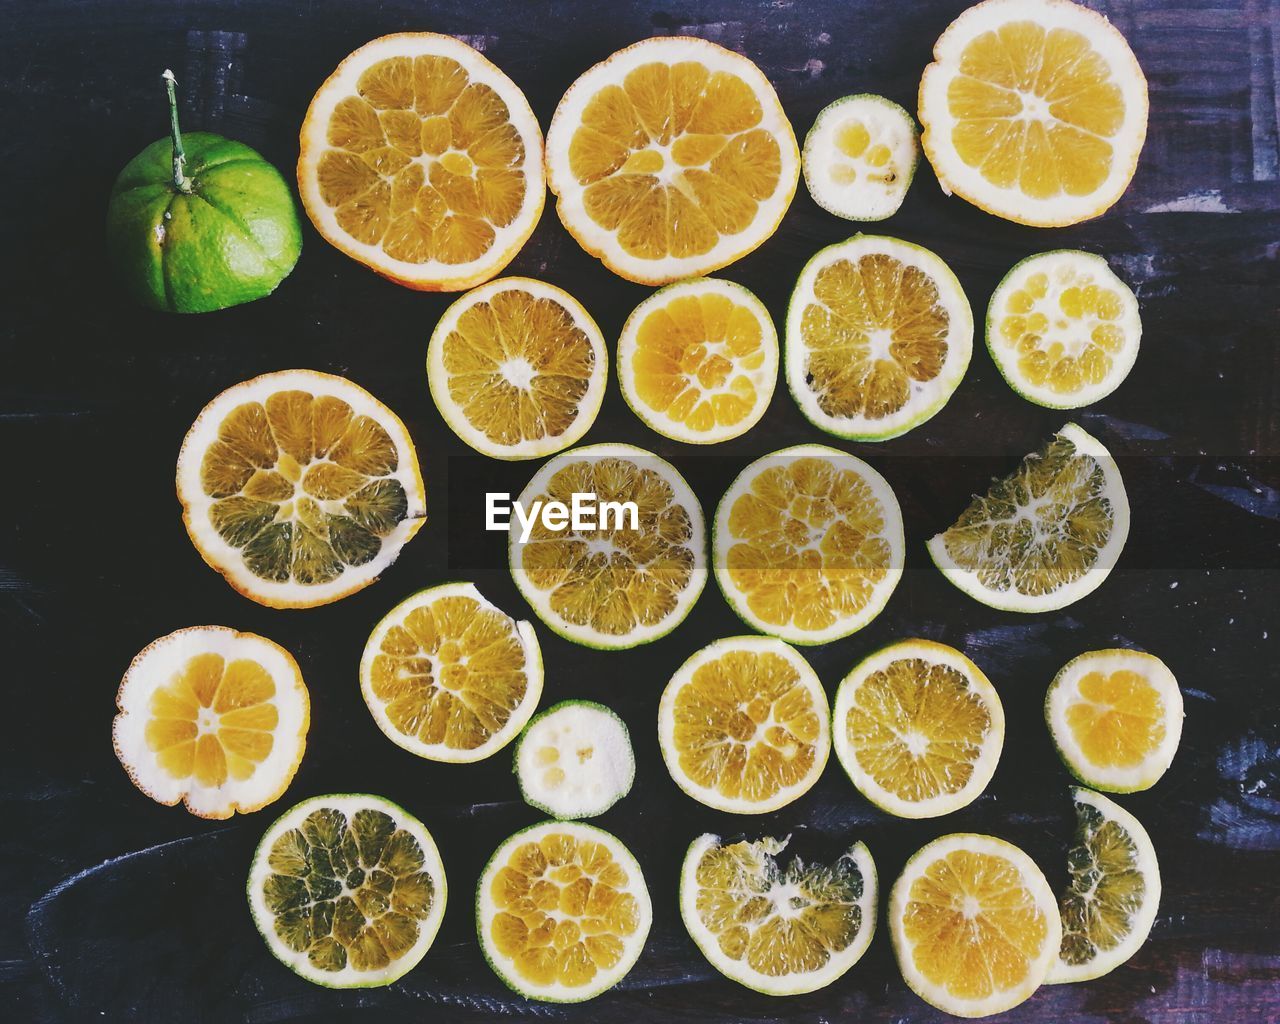 View of lemon slices